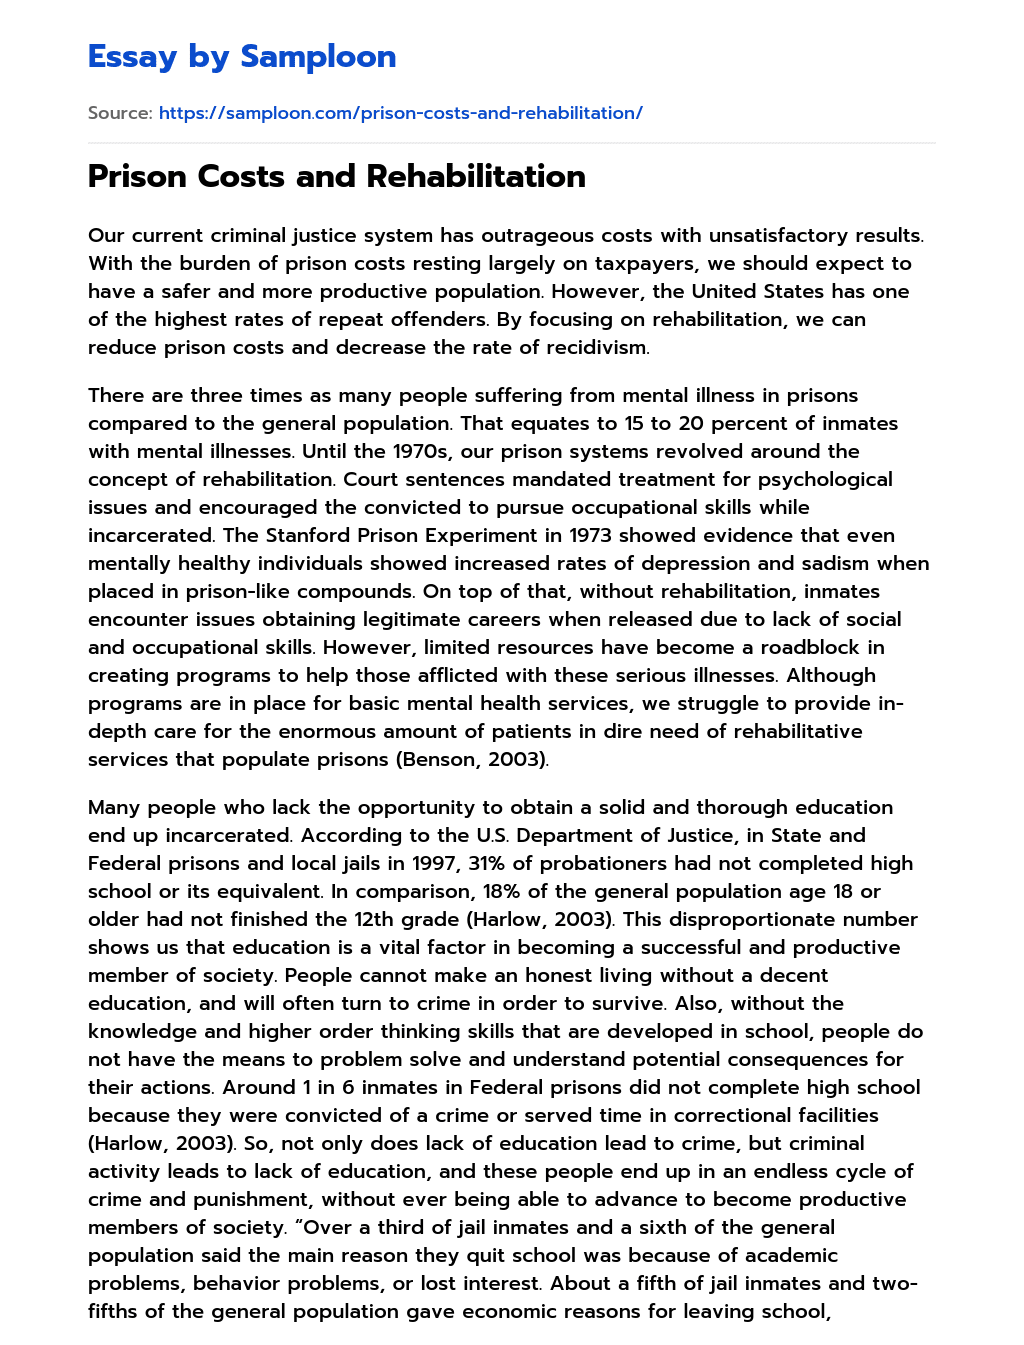 Prison Costs and Rehabilitation essay